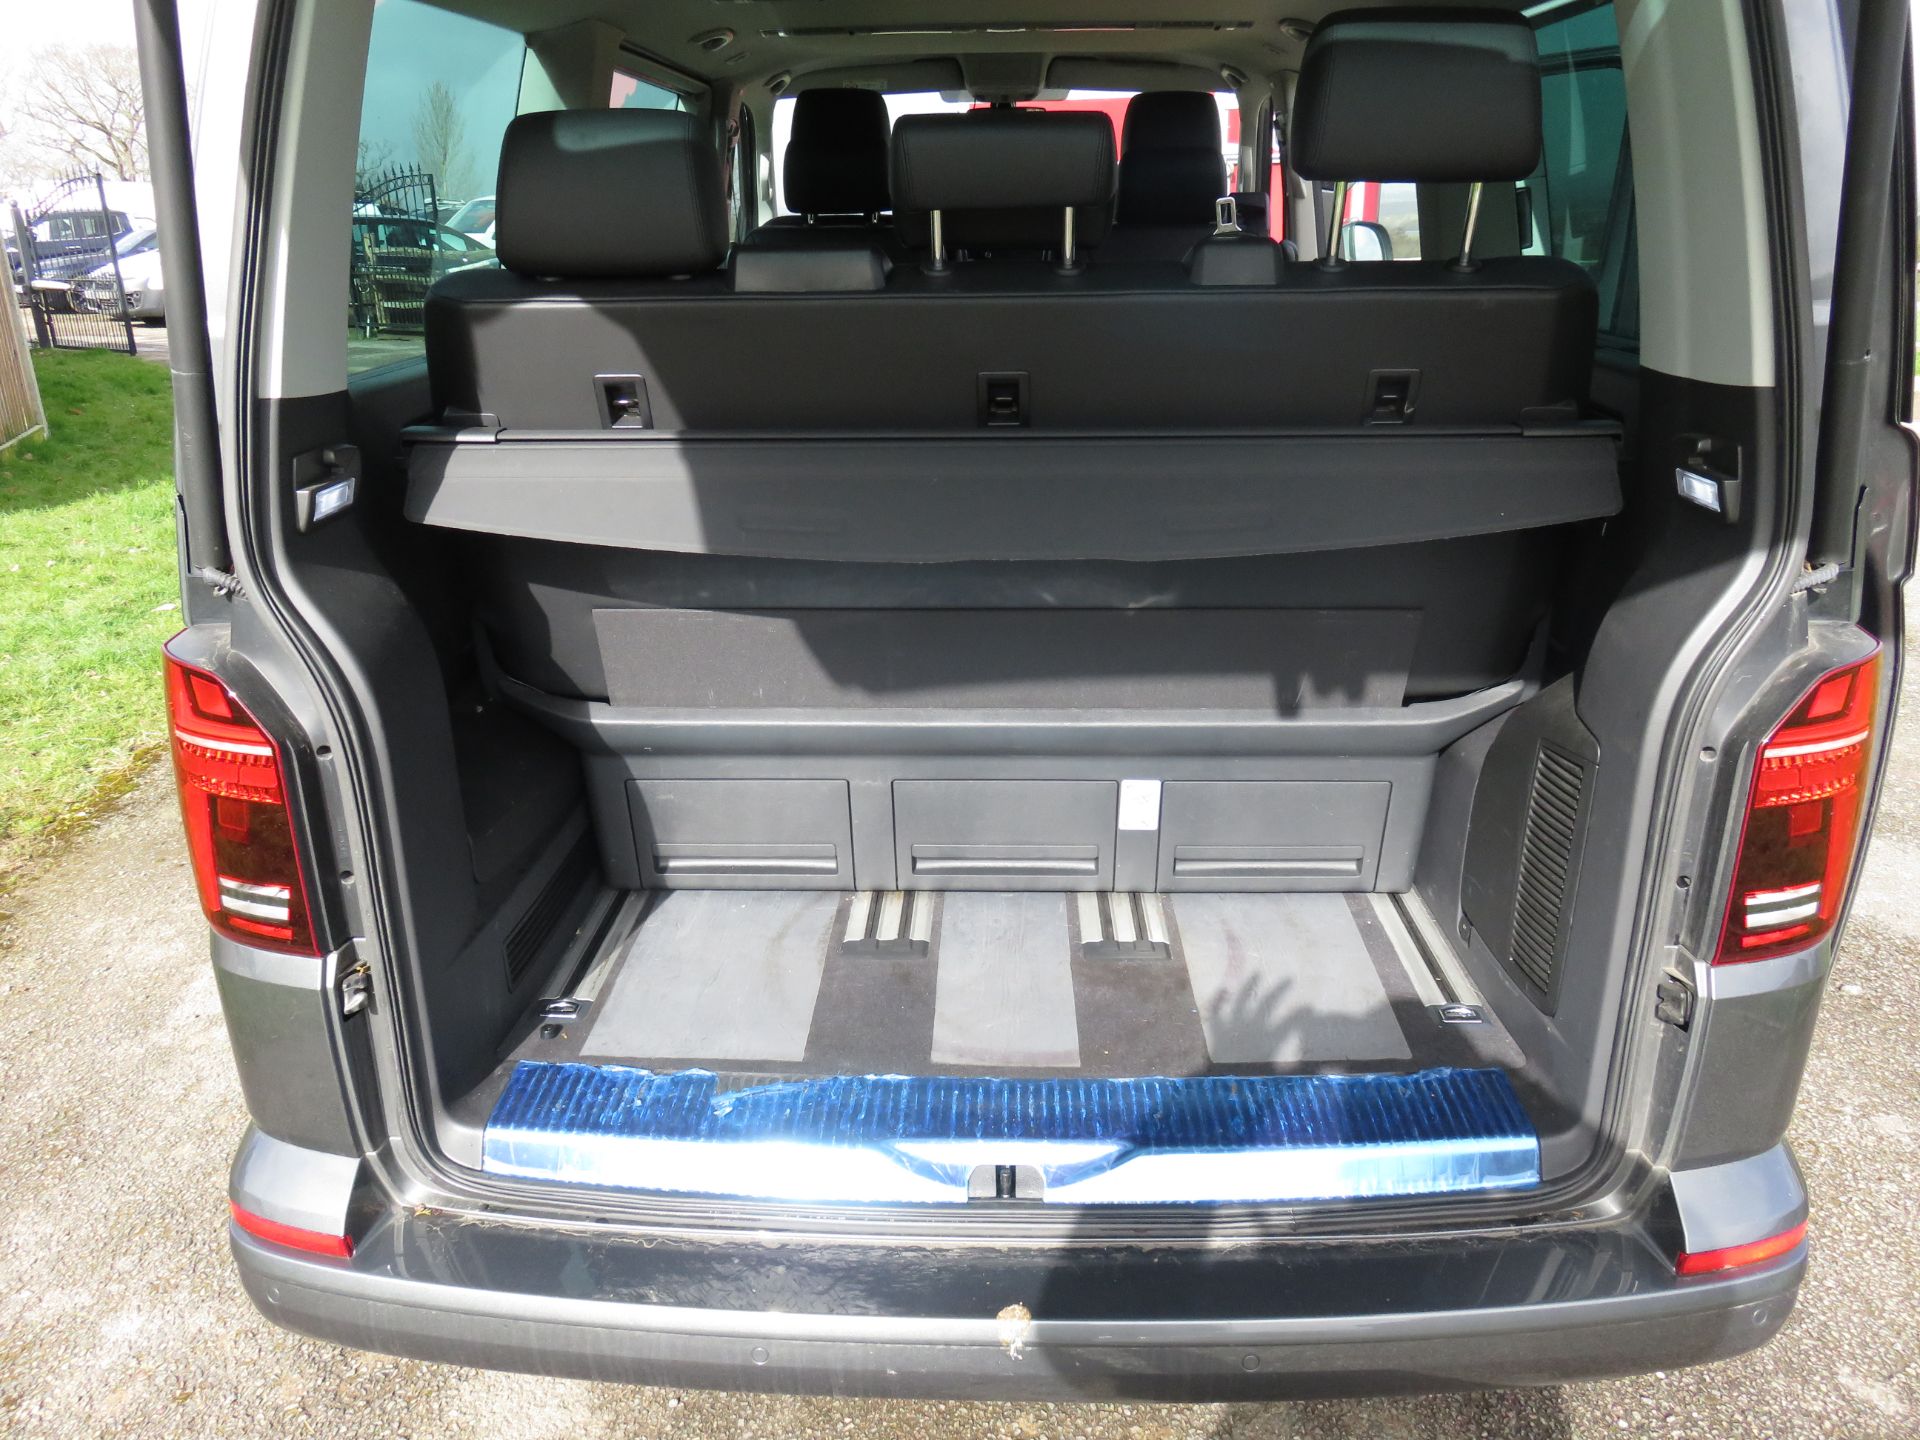 1 Volkswagen Caravelle 2.0 TDI (150PS) Executive BMT SNB DSG 7 Seat Five Door MPV - Image 12 of 17